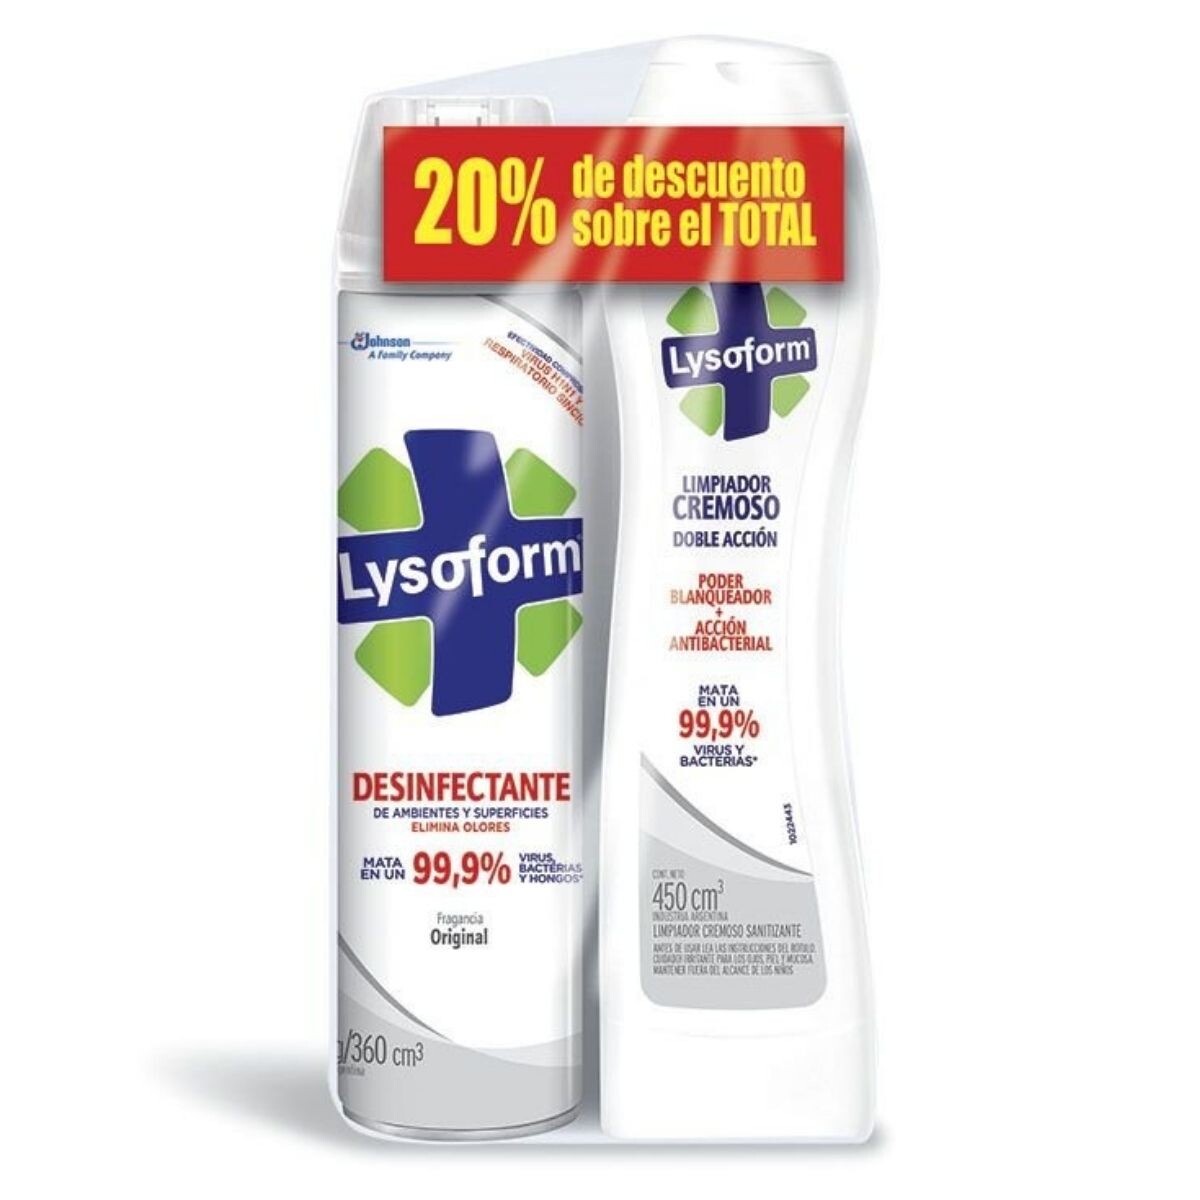 Pack Desinfectante Lysoform Aerosol Original 360 cm3 + Limpiador Crema Lysoform Antibacterial 450 cm3 